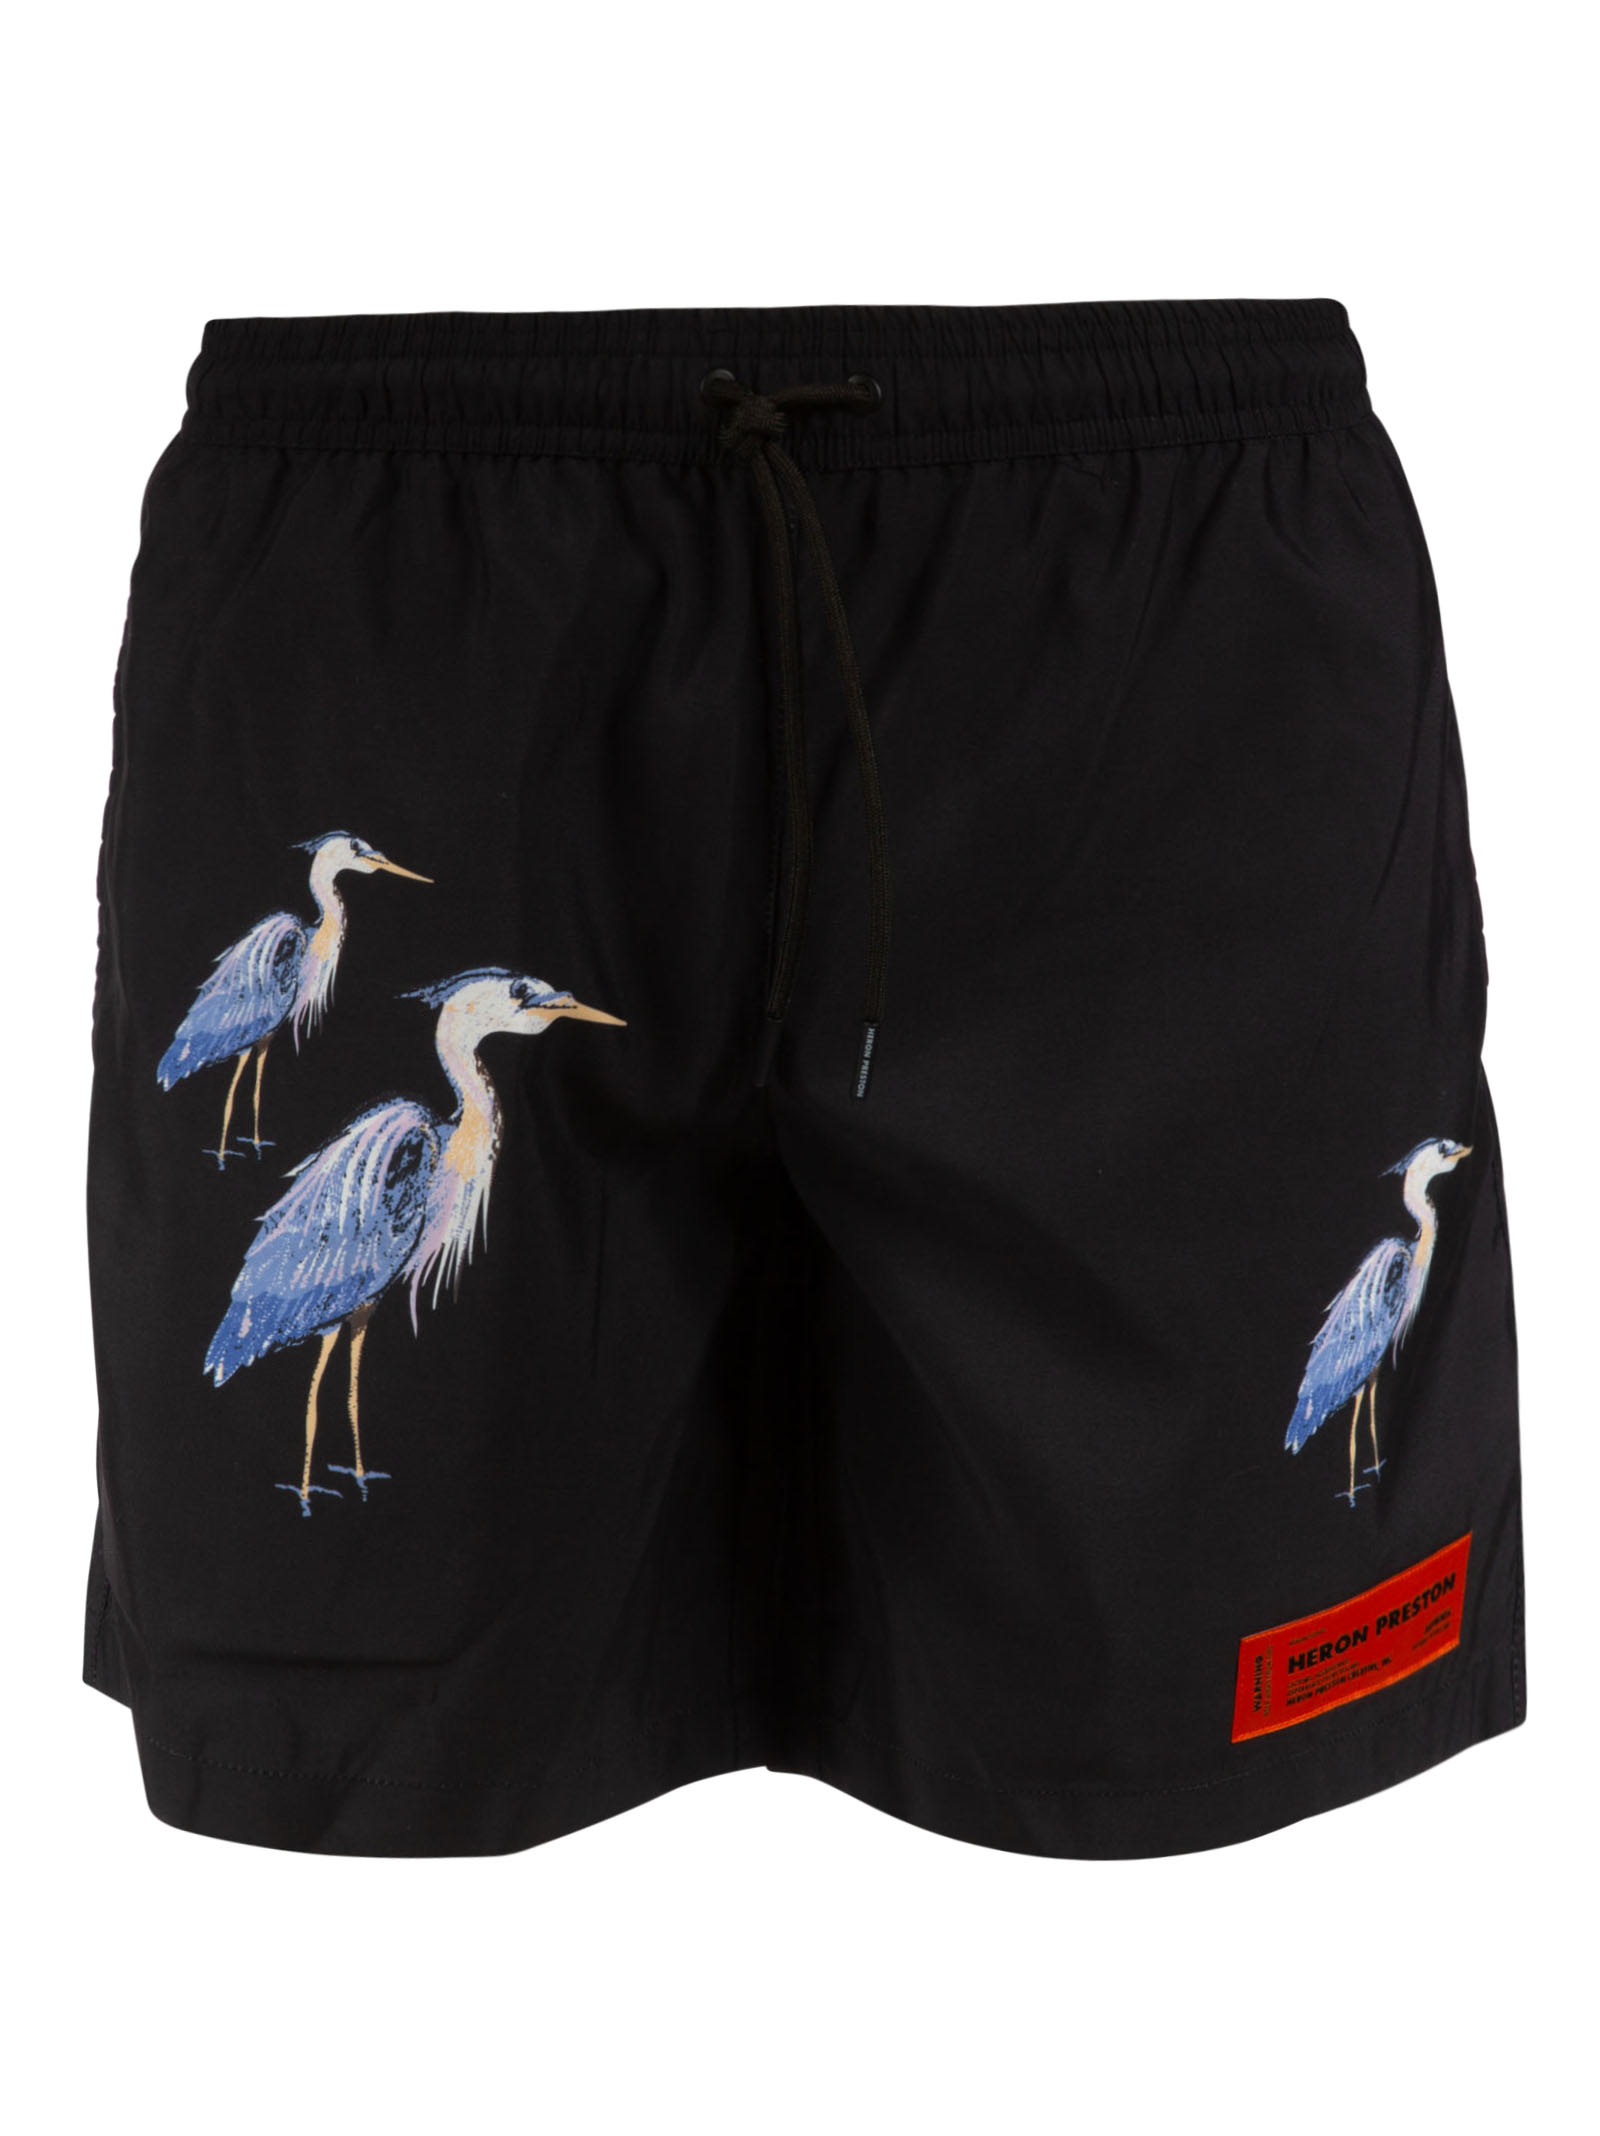 HERON PRESTON Nylon Printed Swim Shorts